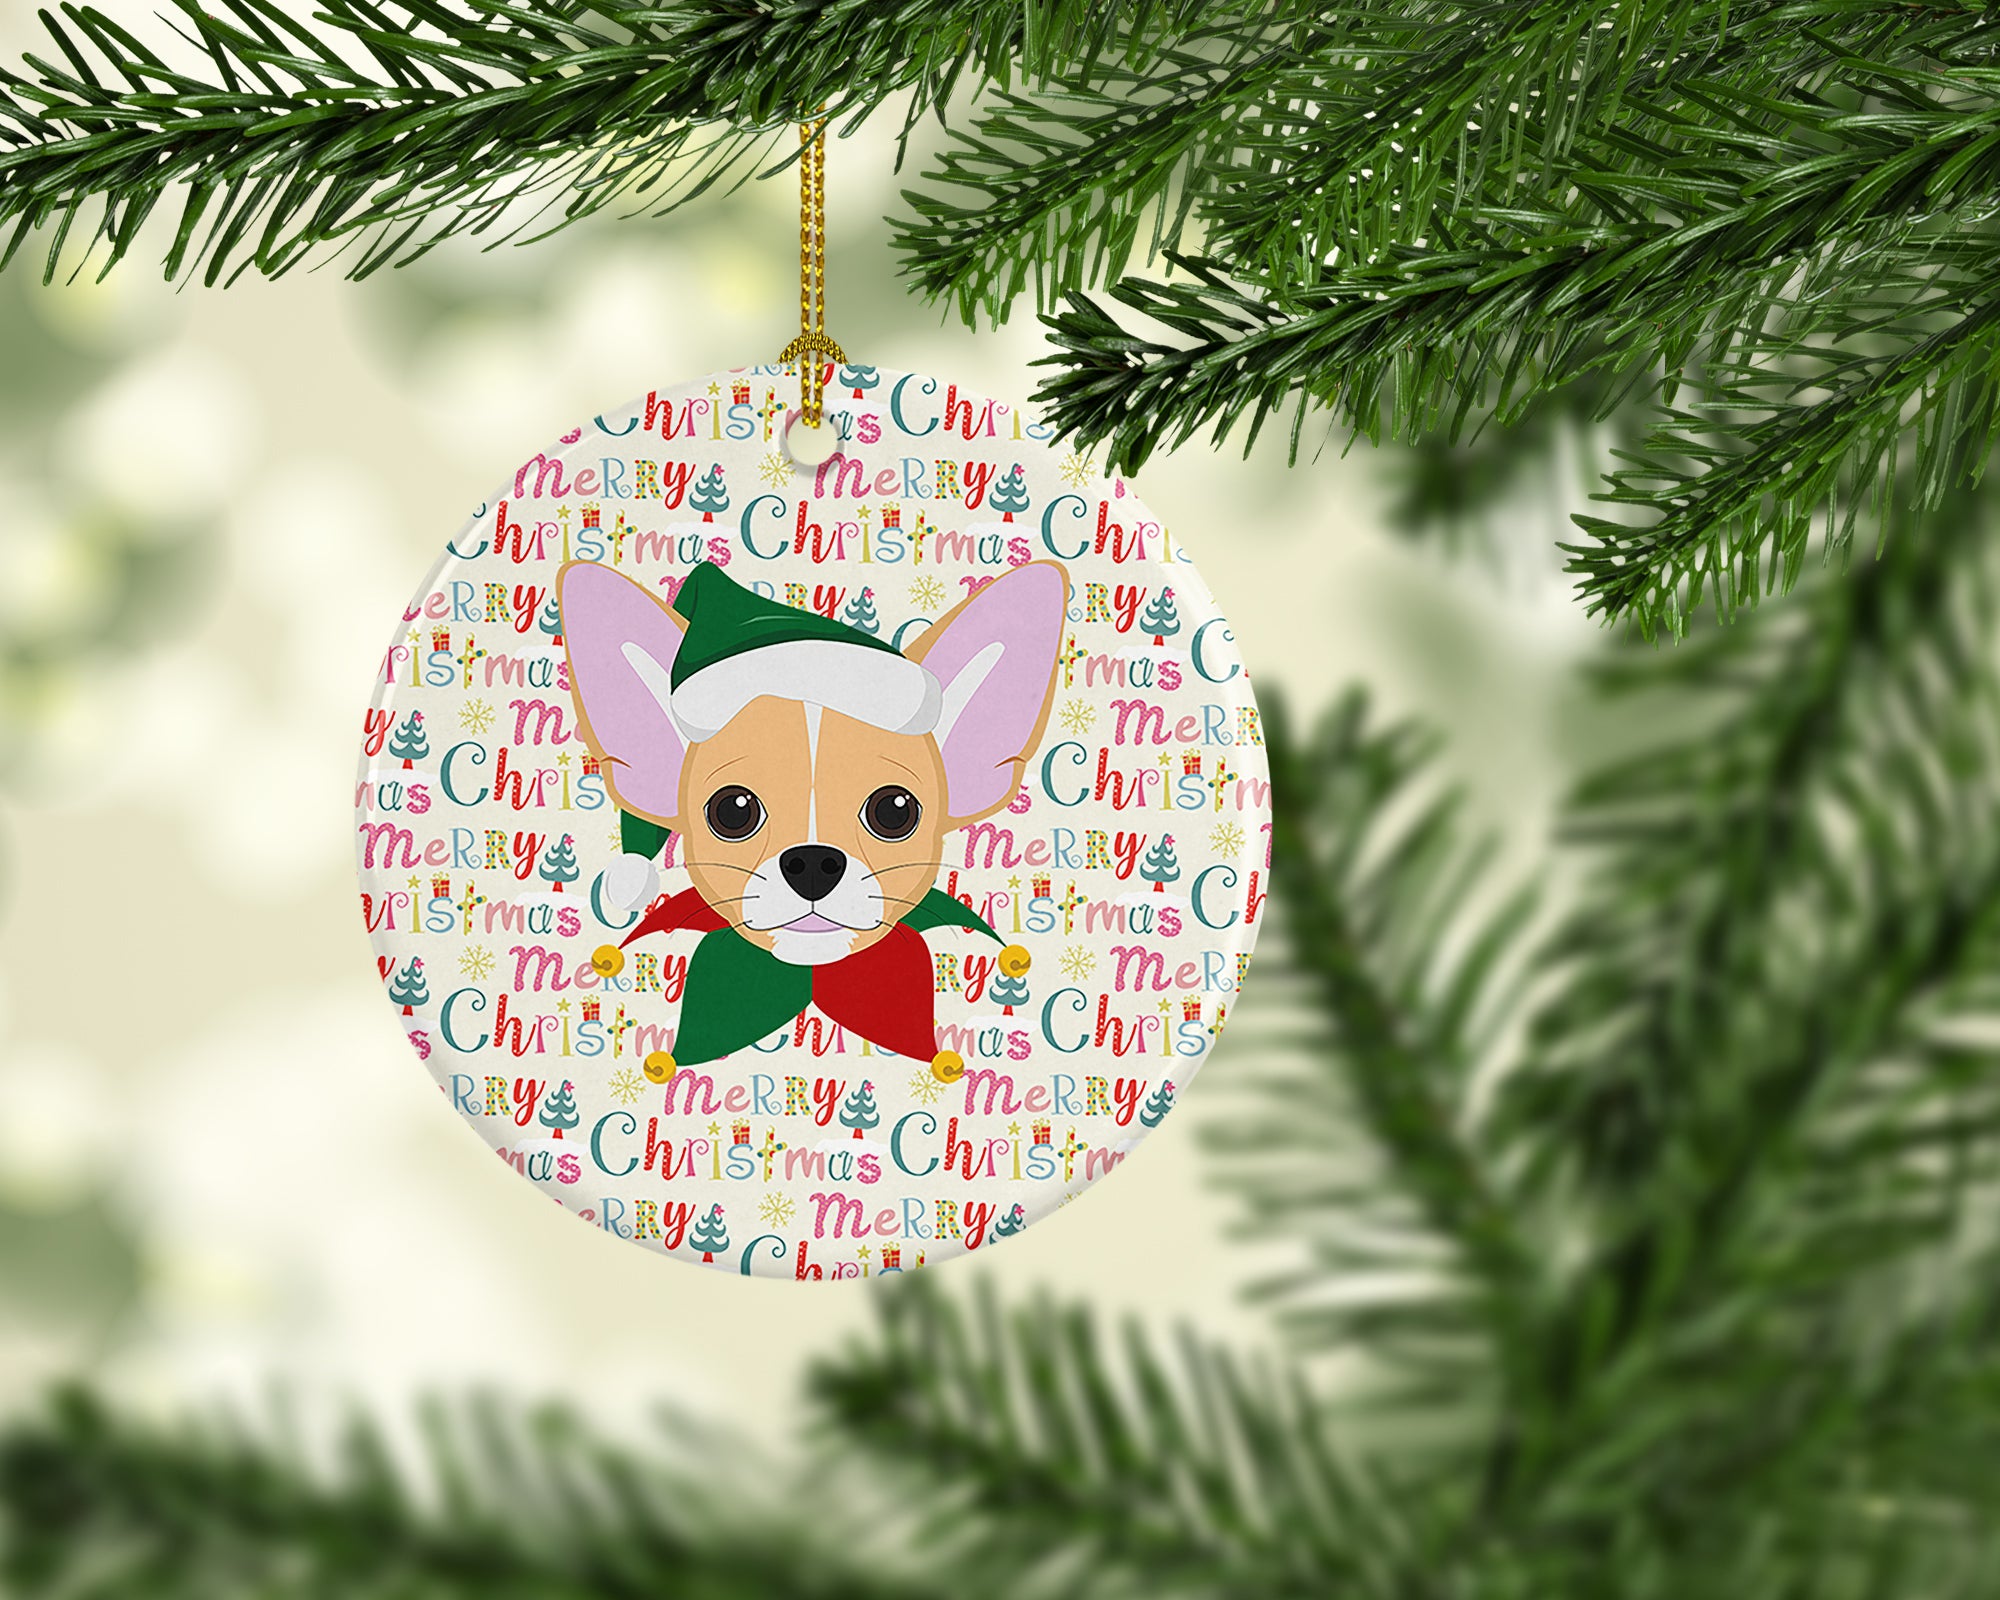 Buy this Chihuahua Merry Christmas Ceramic Ornament